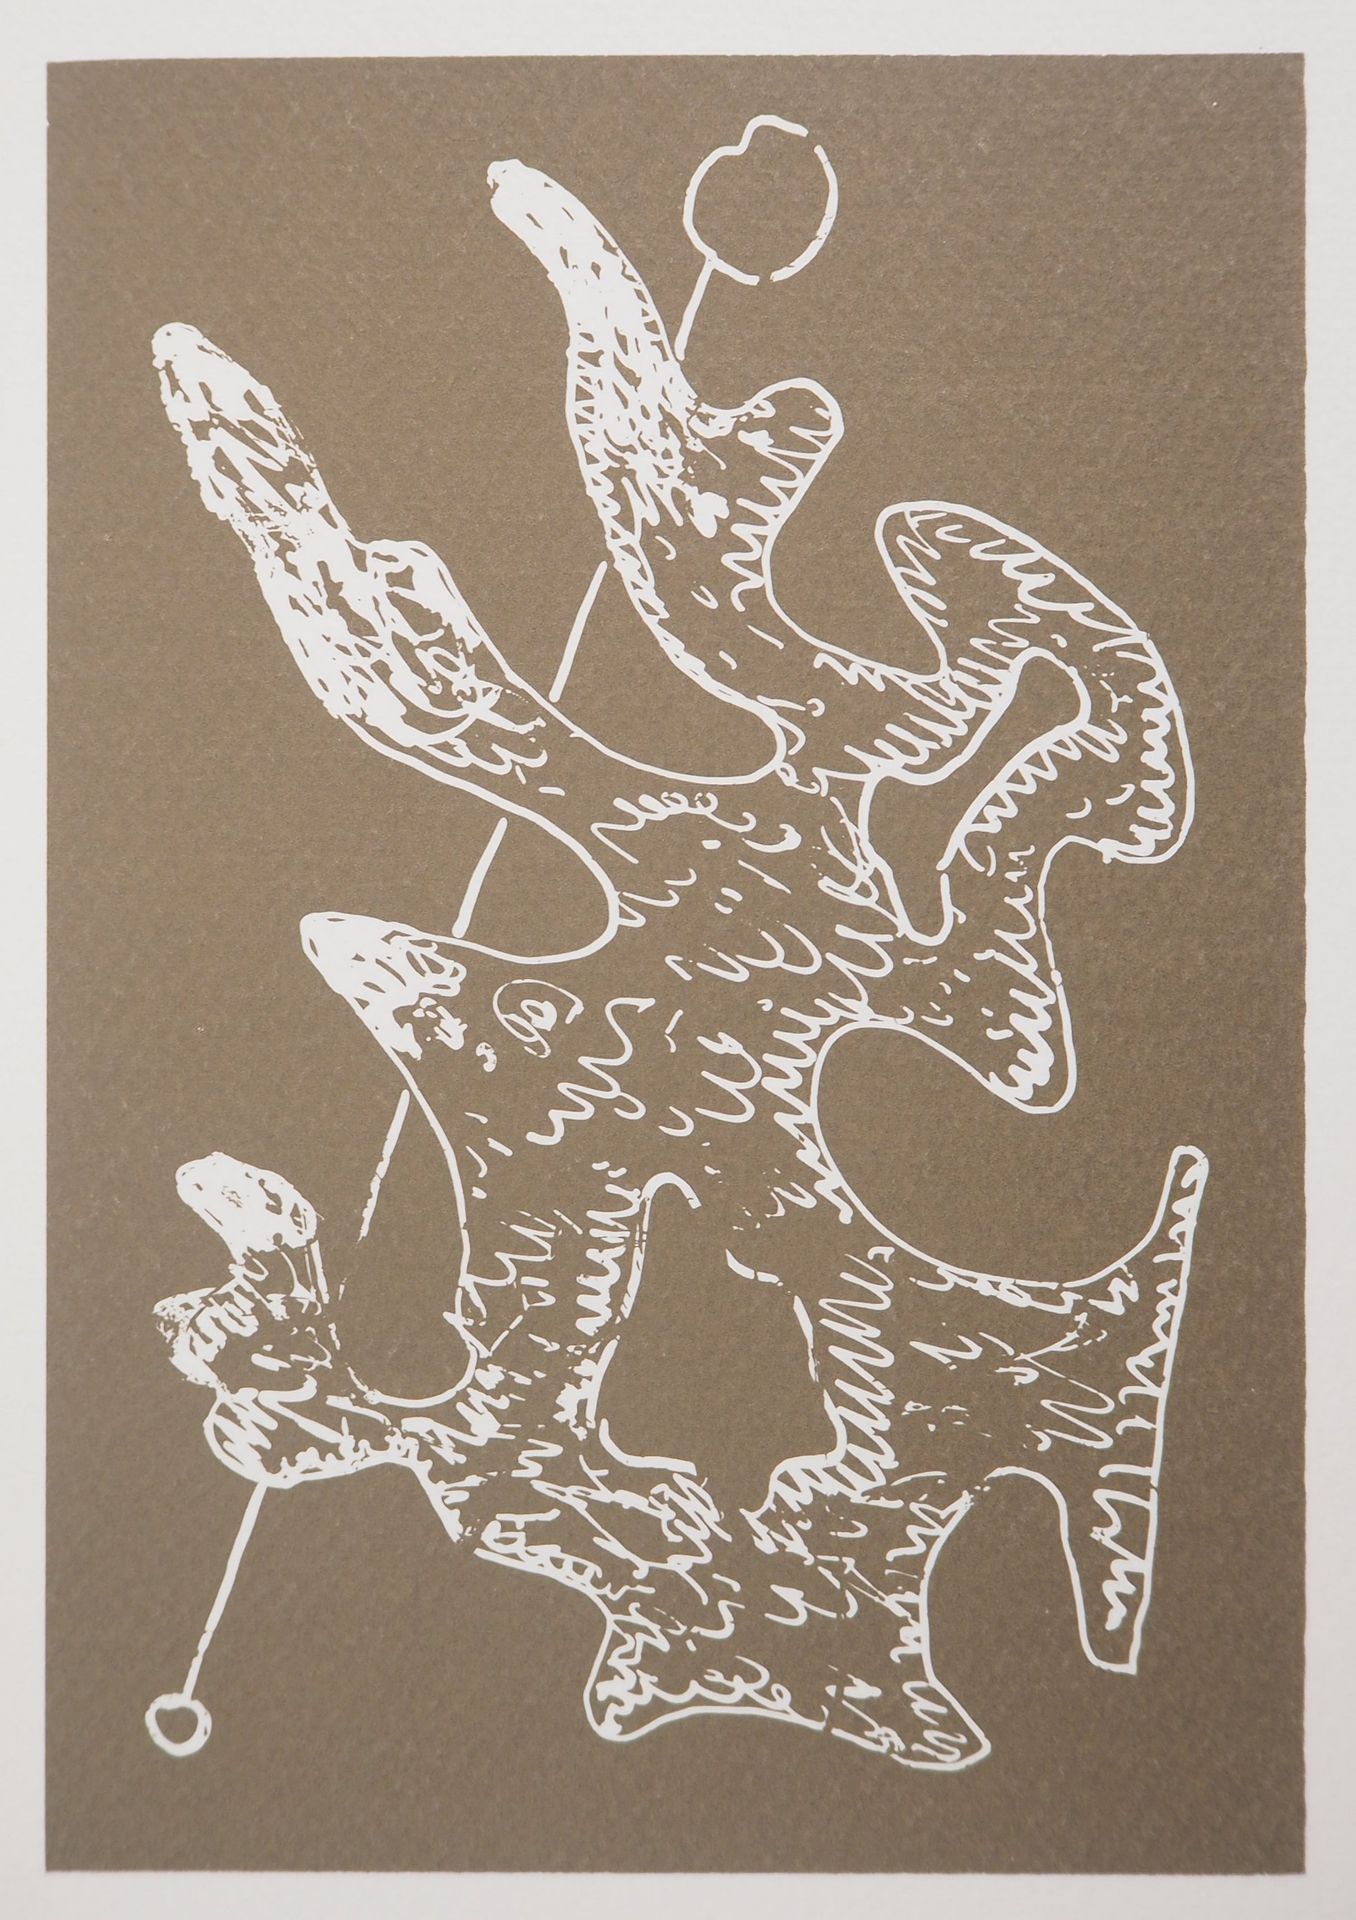 Man Ray 曼-雷(Emmanuel Radnitsky)

绿色的梦幻般的人物，玛丽，1969年

原创影印版画

牛皮纸上，20.5 x 14.5厘米
&hellip;